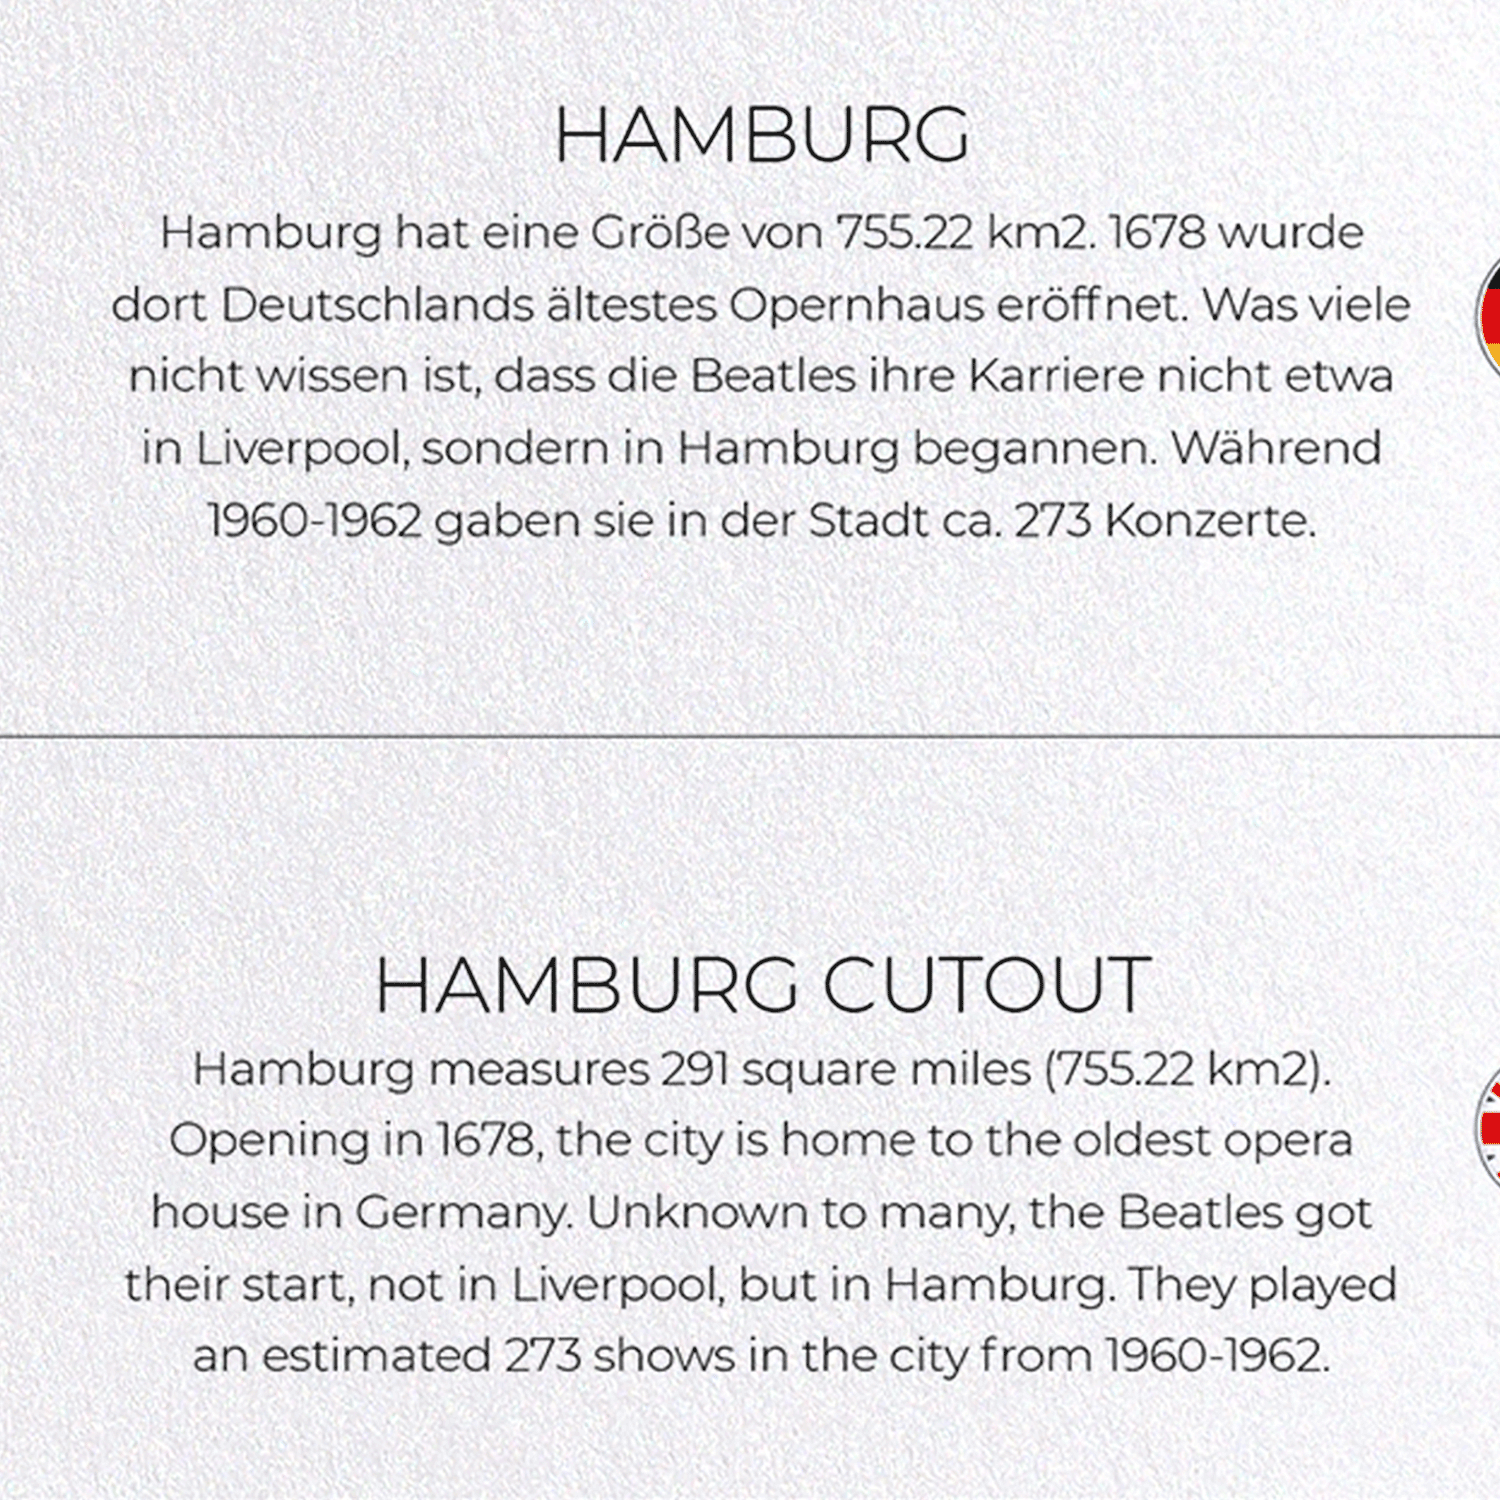 HAMBURG CUTOUT